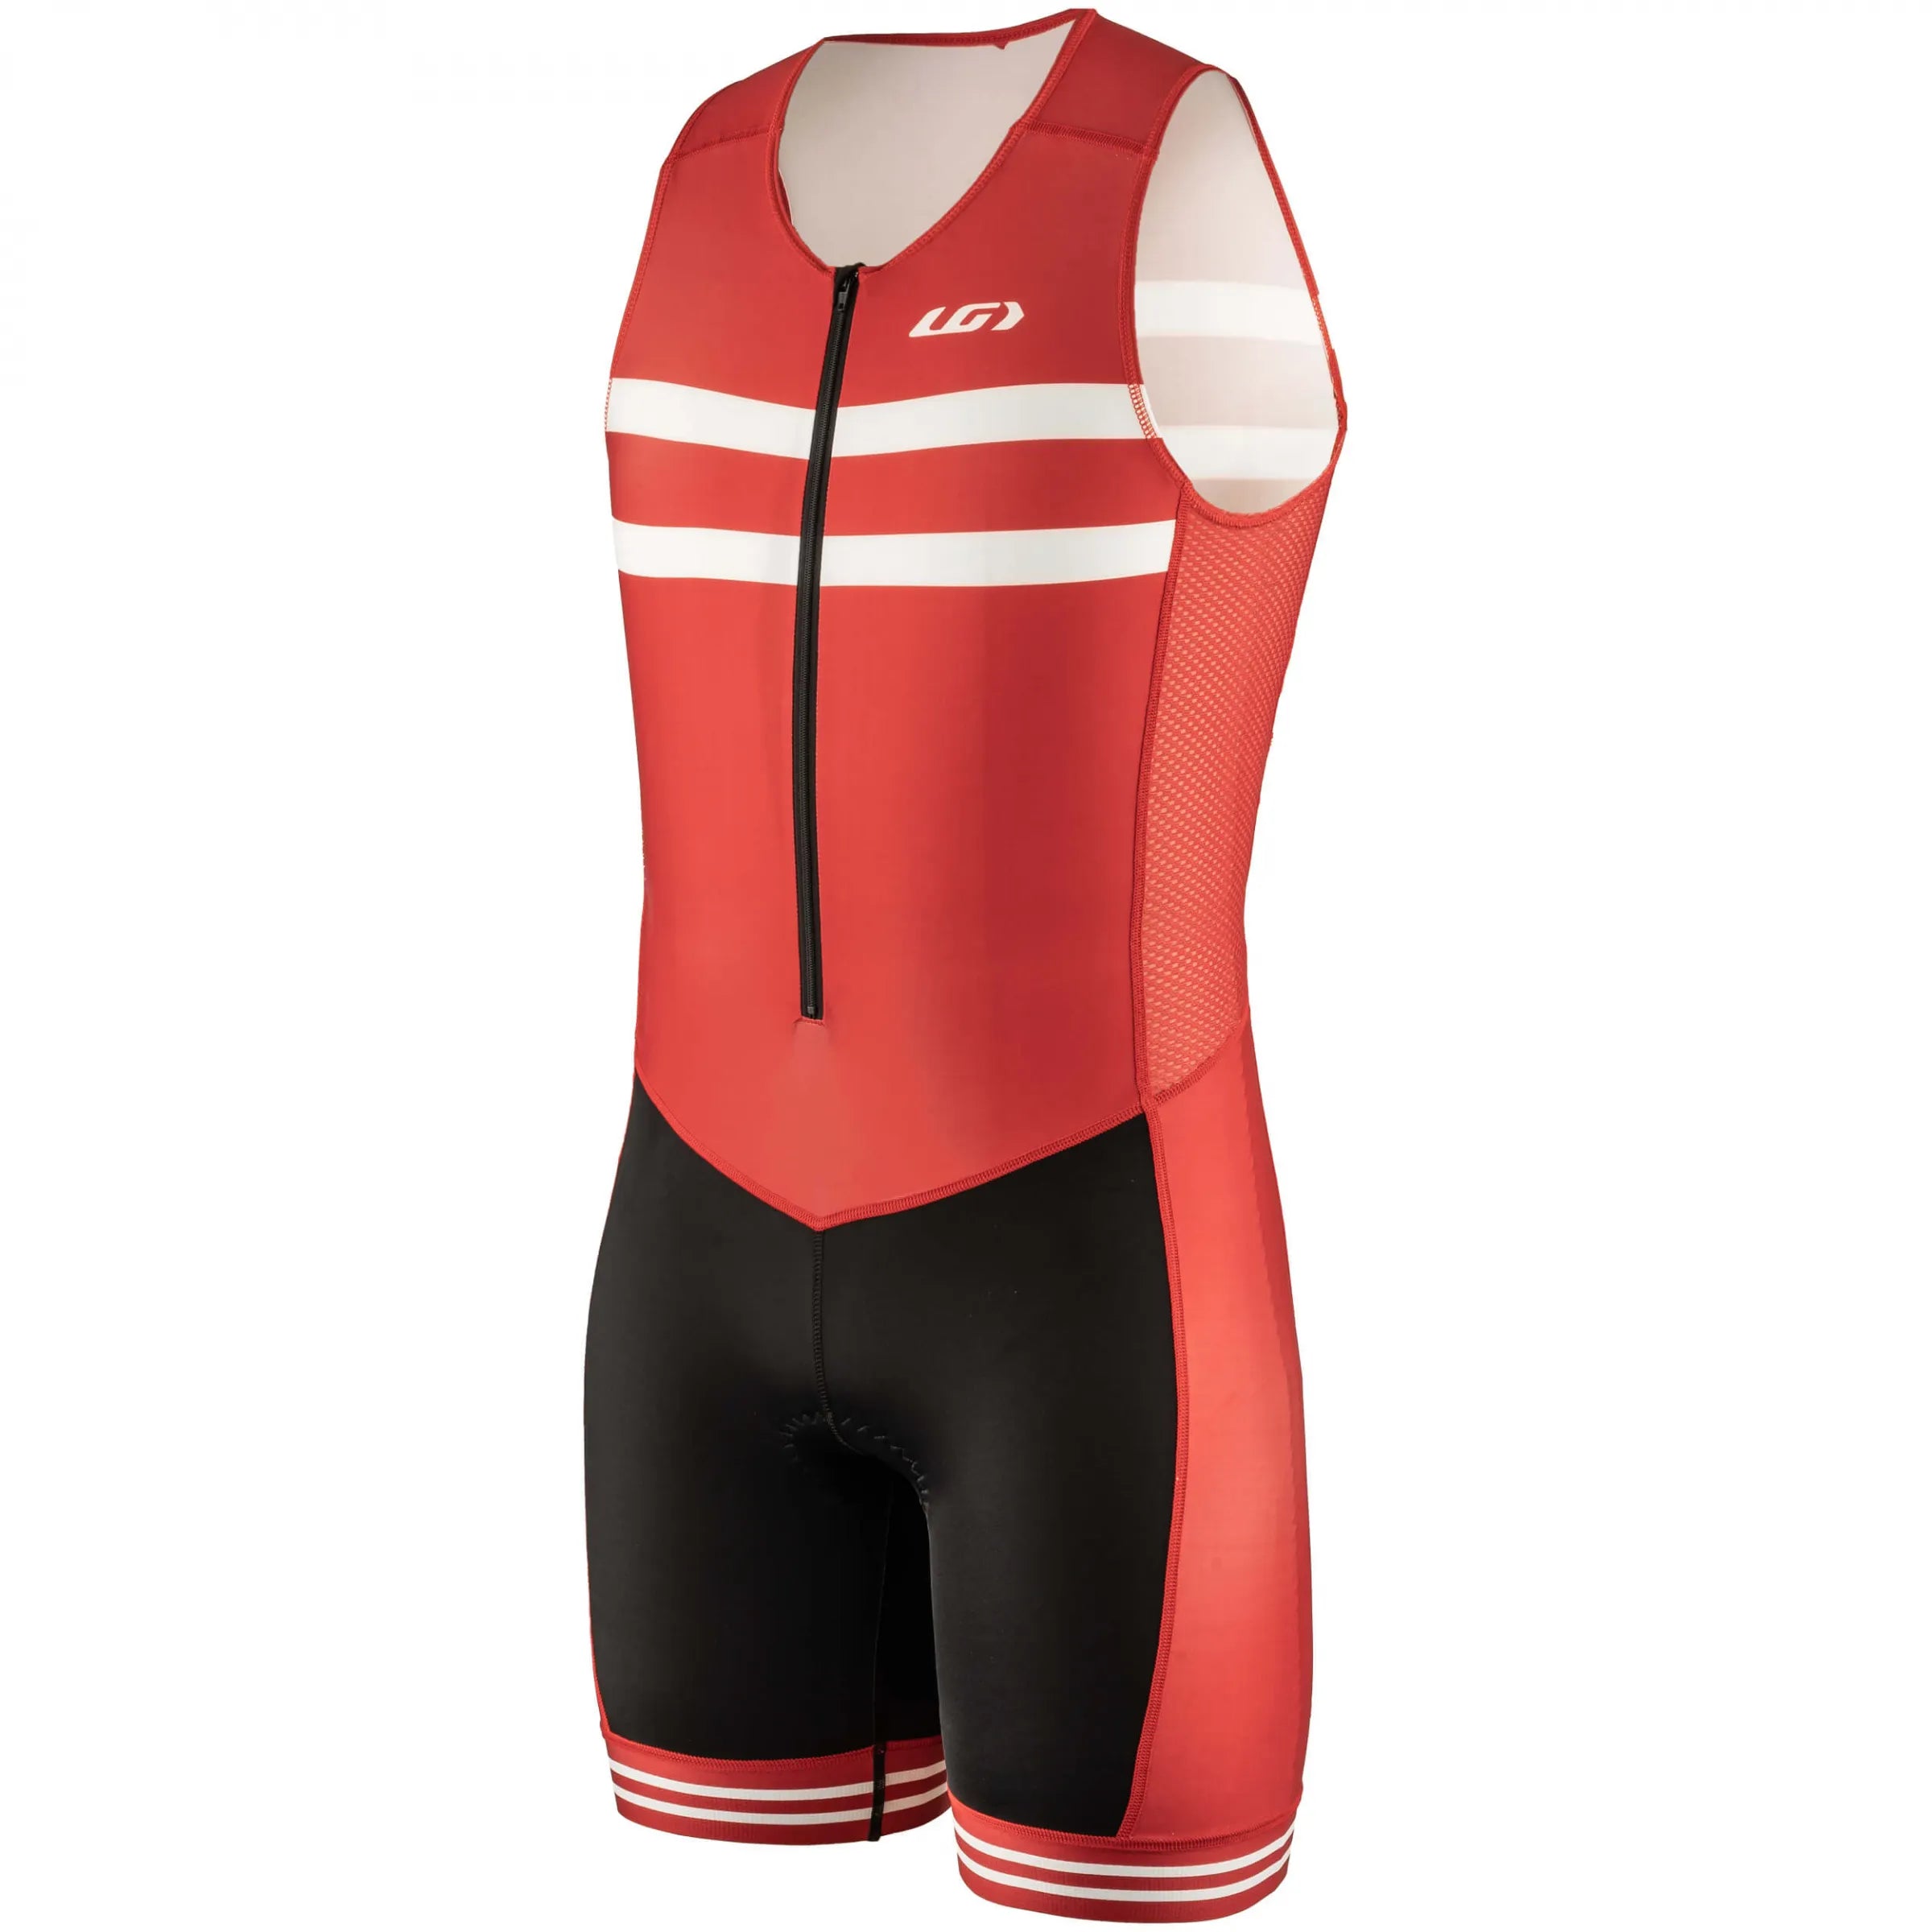 Louis Garneau Red & Black mens cycling jersey Size L.